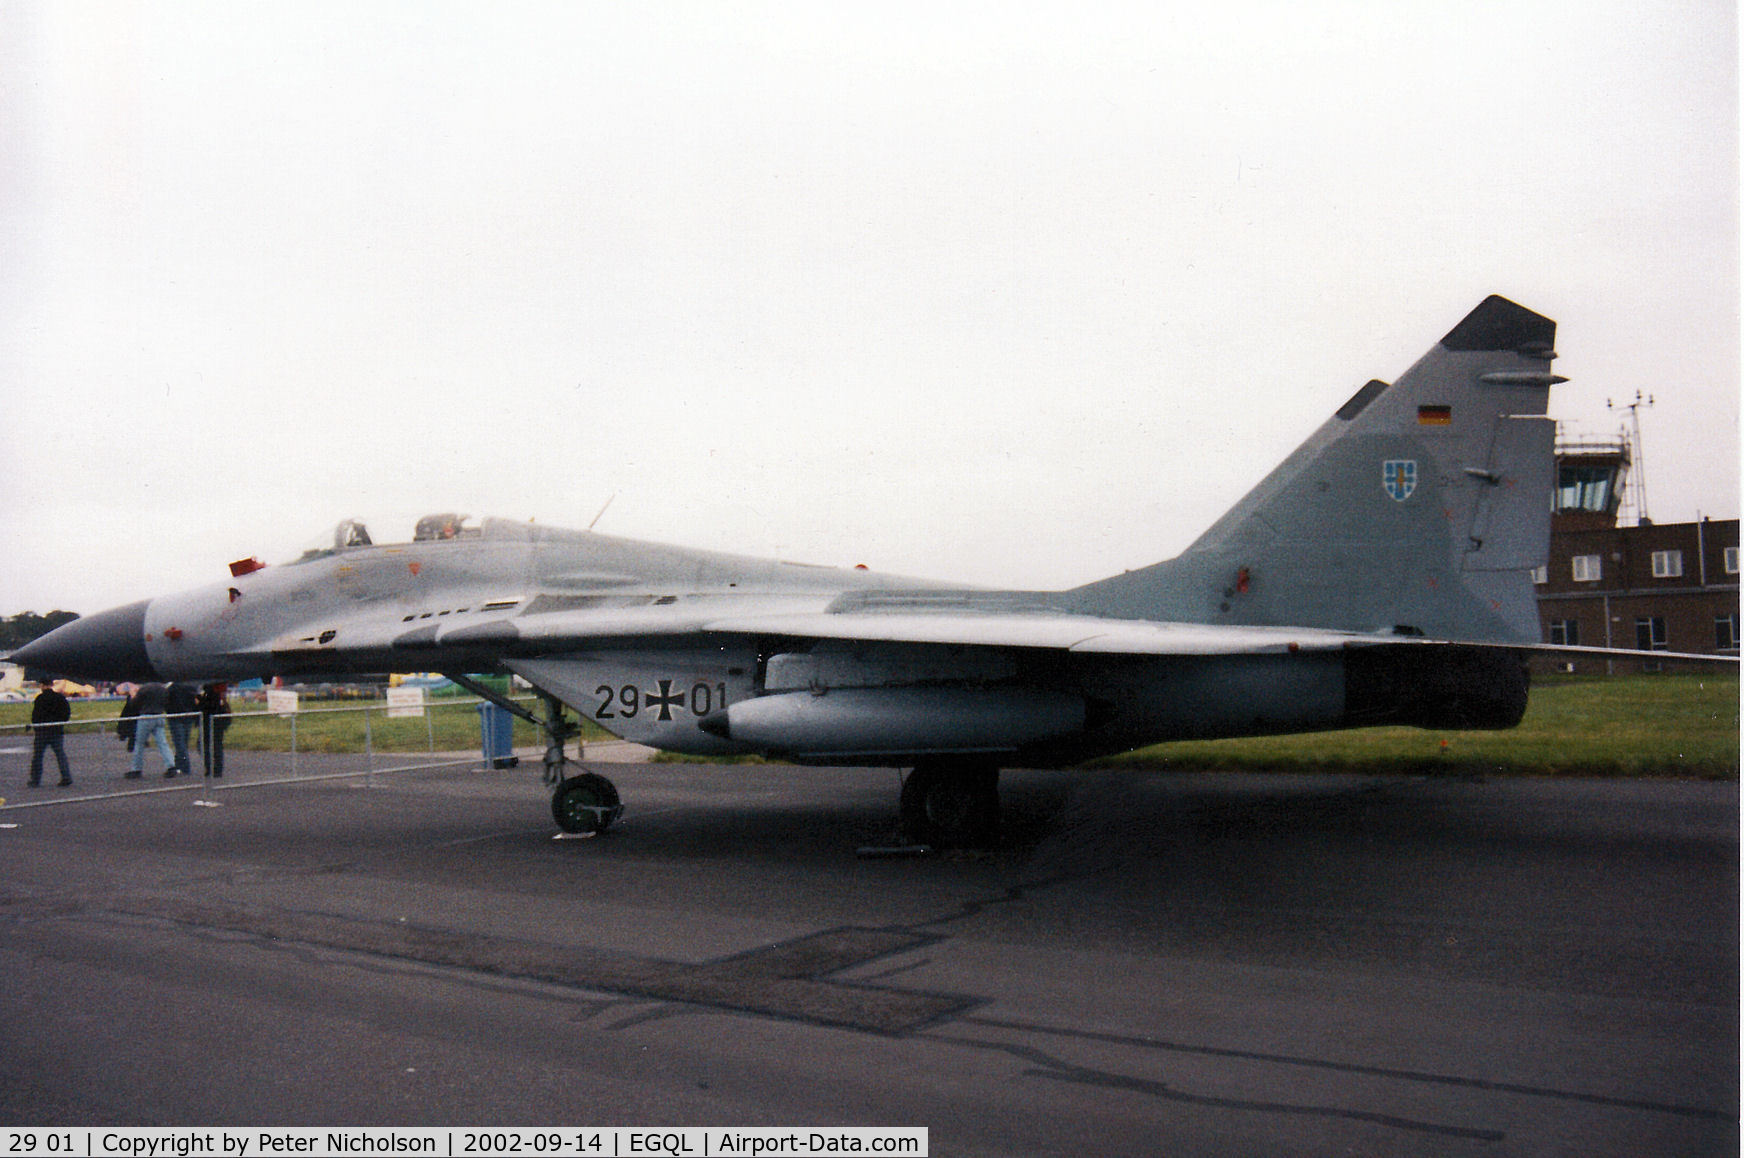 29 01, 1988 Mikoyan-Gurevich MiG-29G C/N 2960525106/3412, MiG-29A, callsign German Air Force 2905, of JG-73 on display at the 2002 RAF Leuchars Airshow.